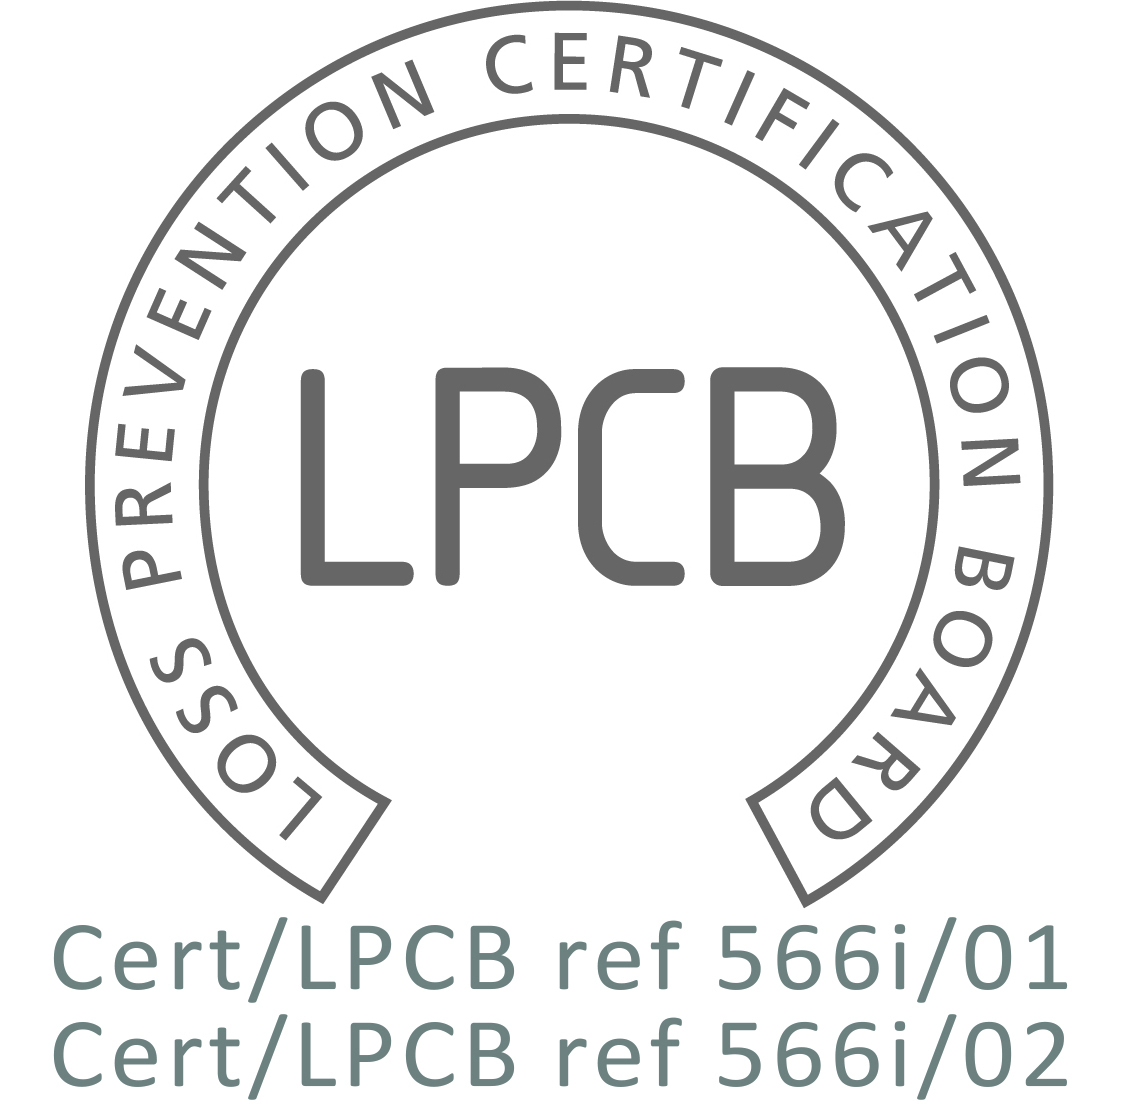 lpcb-logo-mid-grey-566i-01-02.jpg